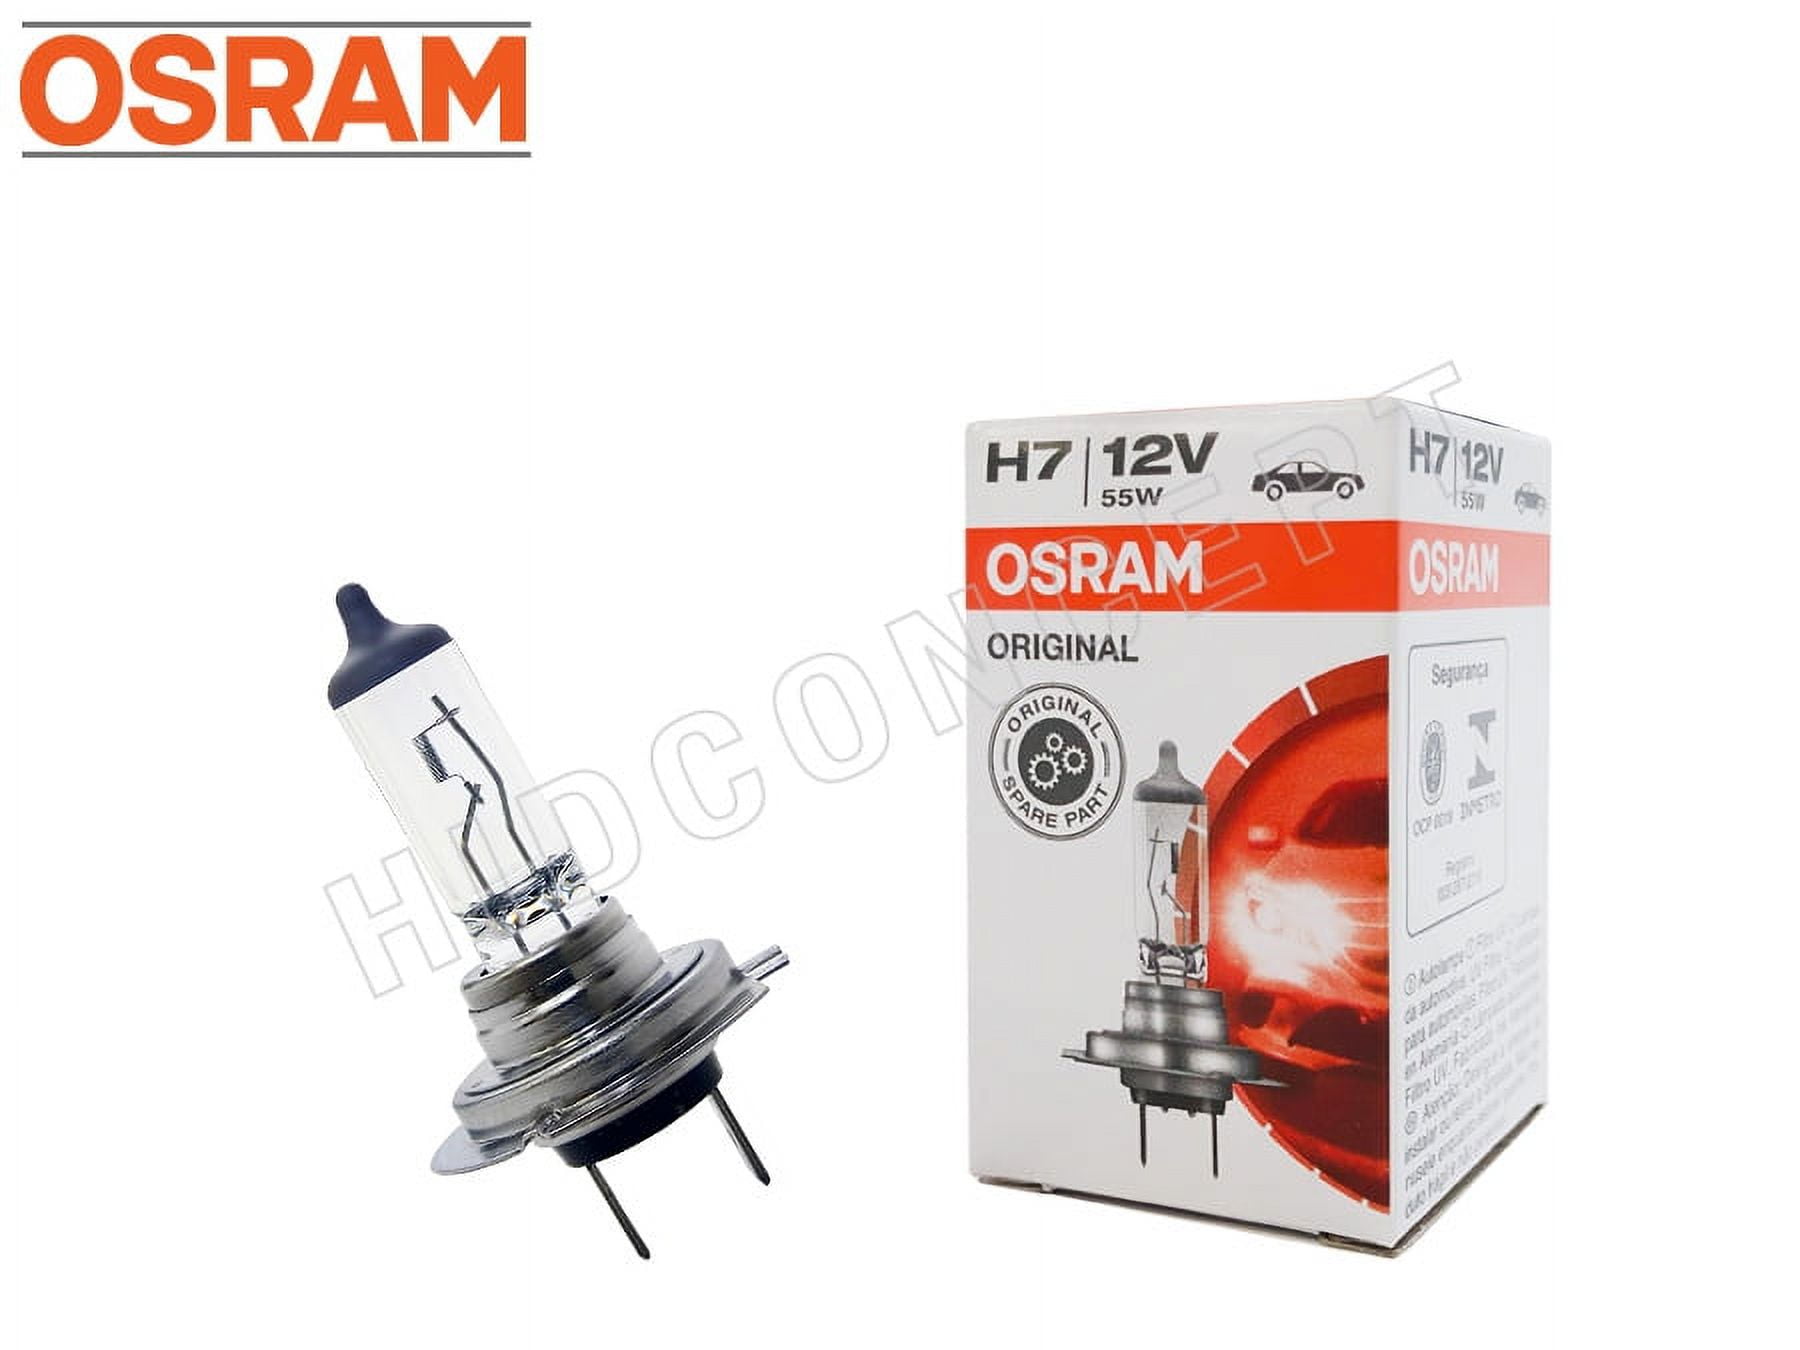 Osram H7 Halogen Headlight Bulbs 64210L 12V 55W Made In Germany 2 Piece Set